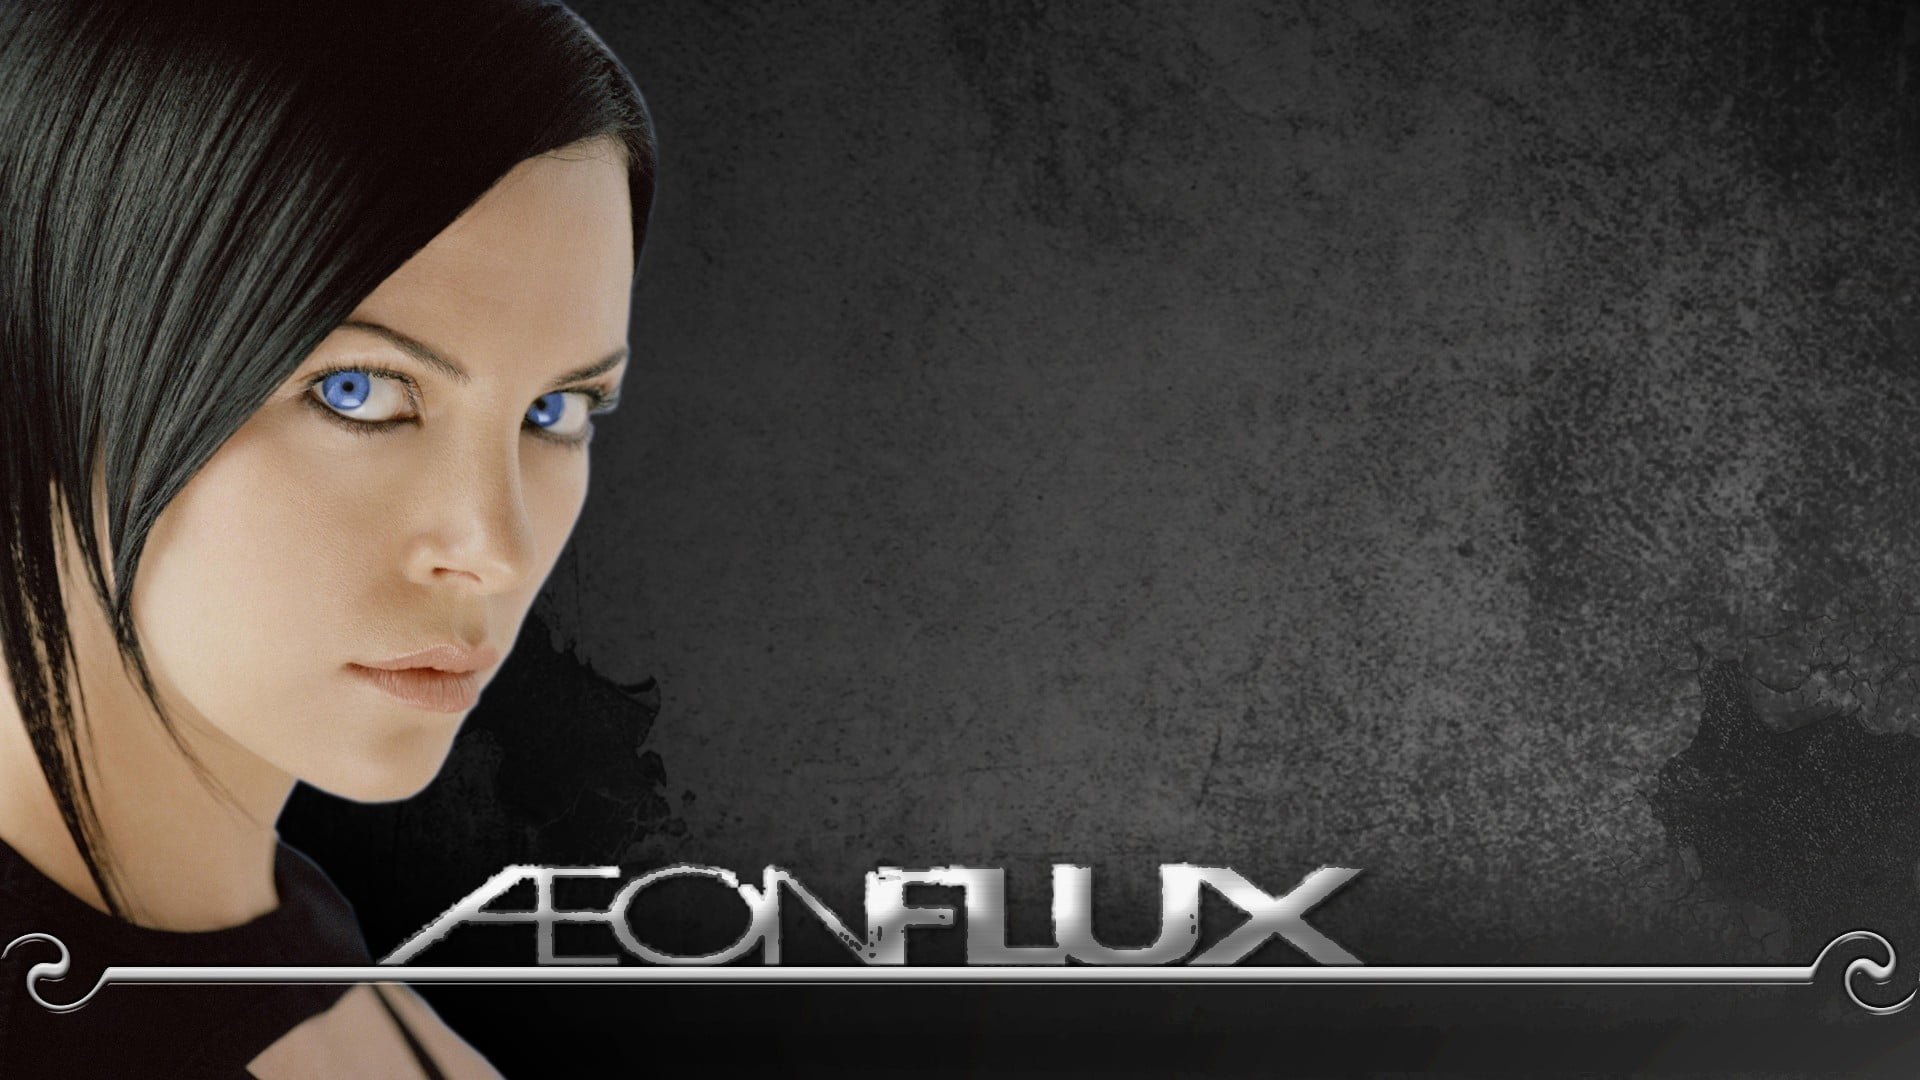 Aeonflux Photo, Movies, Aeon Flux, Charlize Theron - Charlize Theron Aeon Flux , HD Wallpaper & Backgrounds